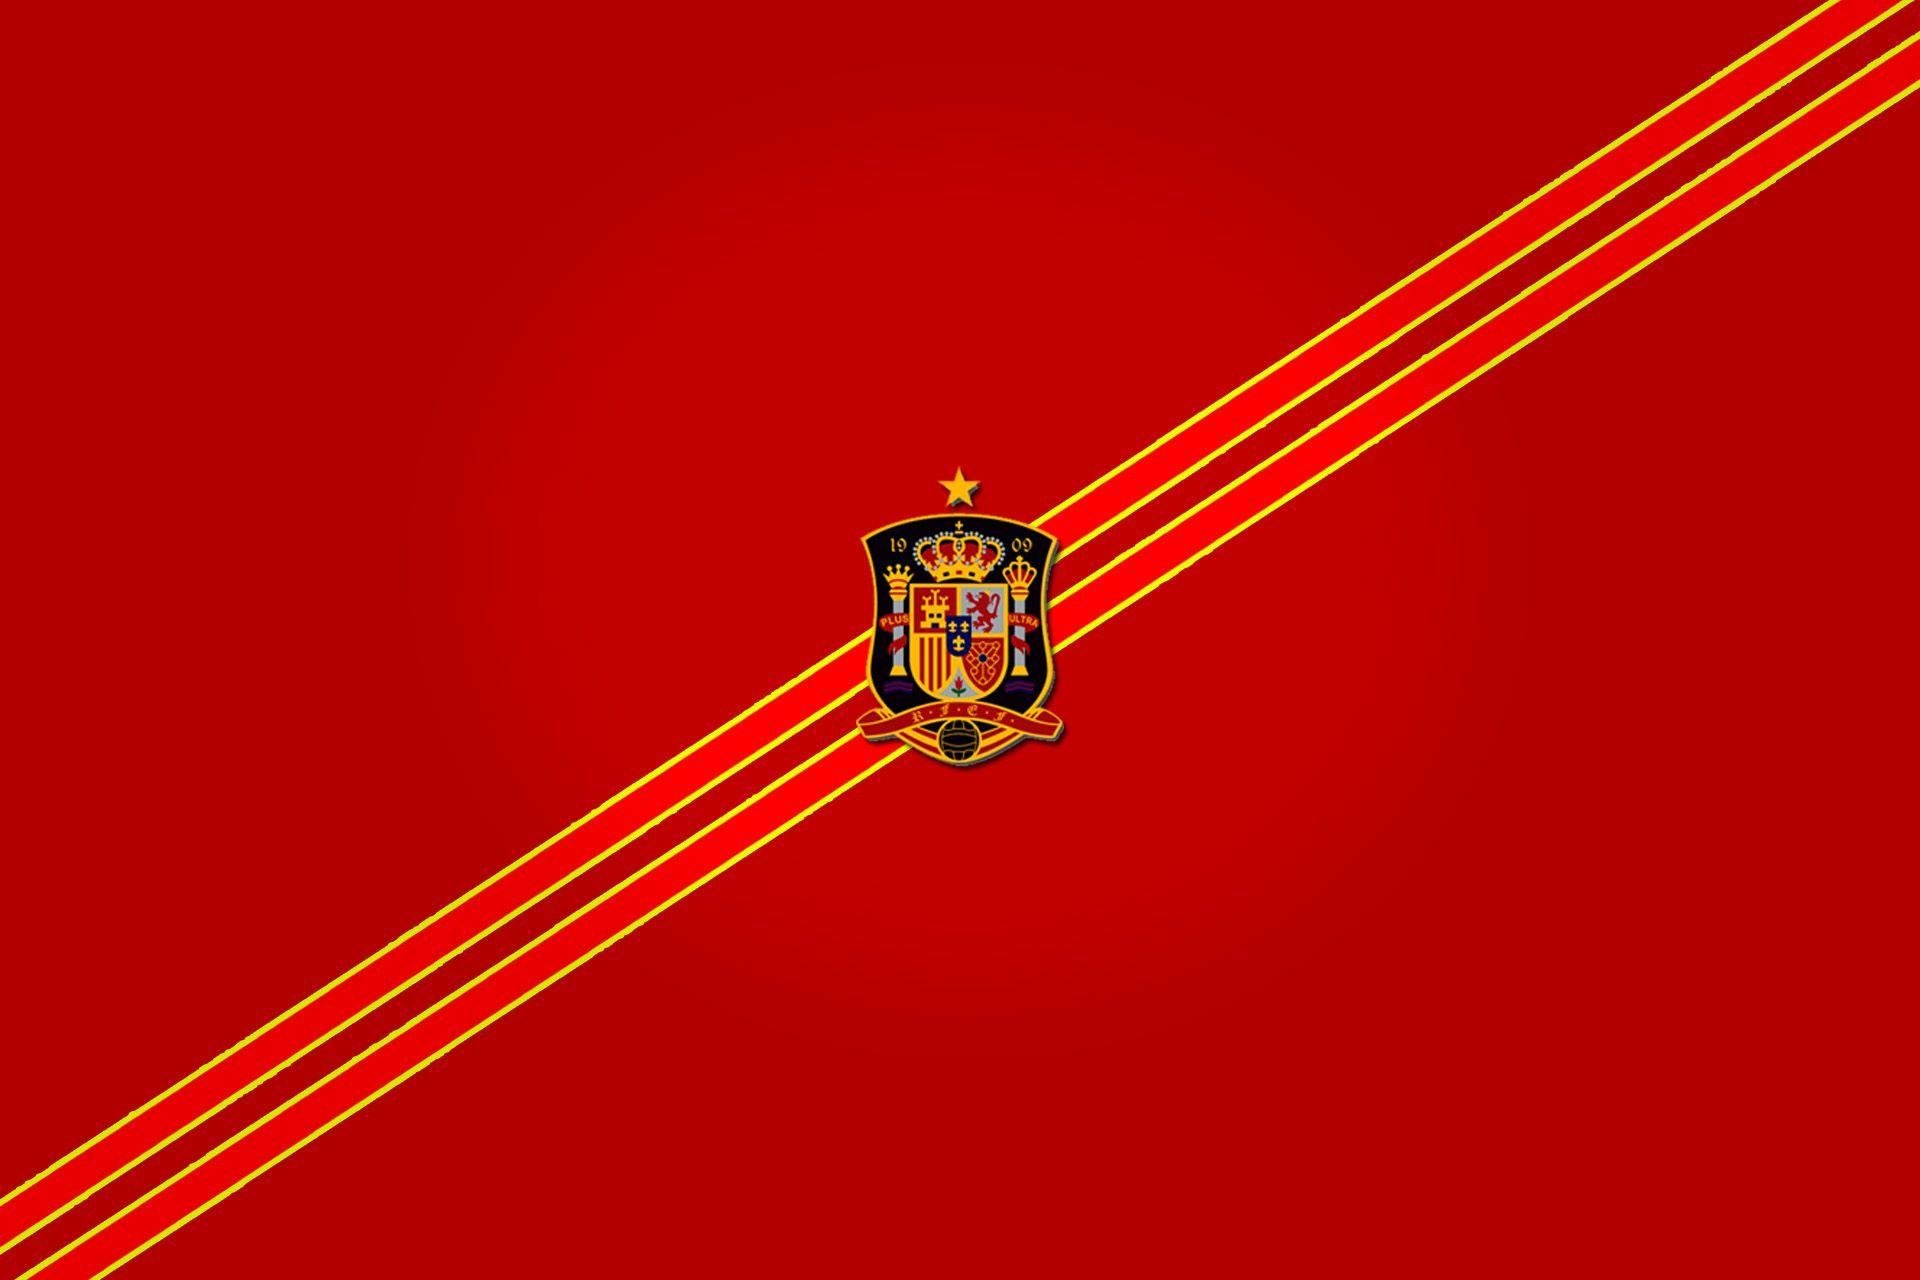 Spain National Football Team Wallpaper, Great HDQ Spain National